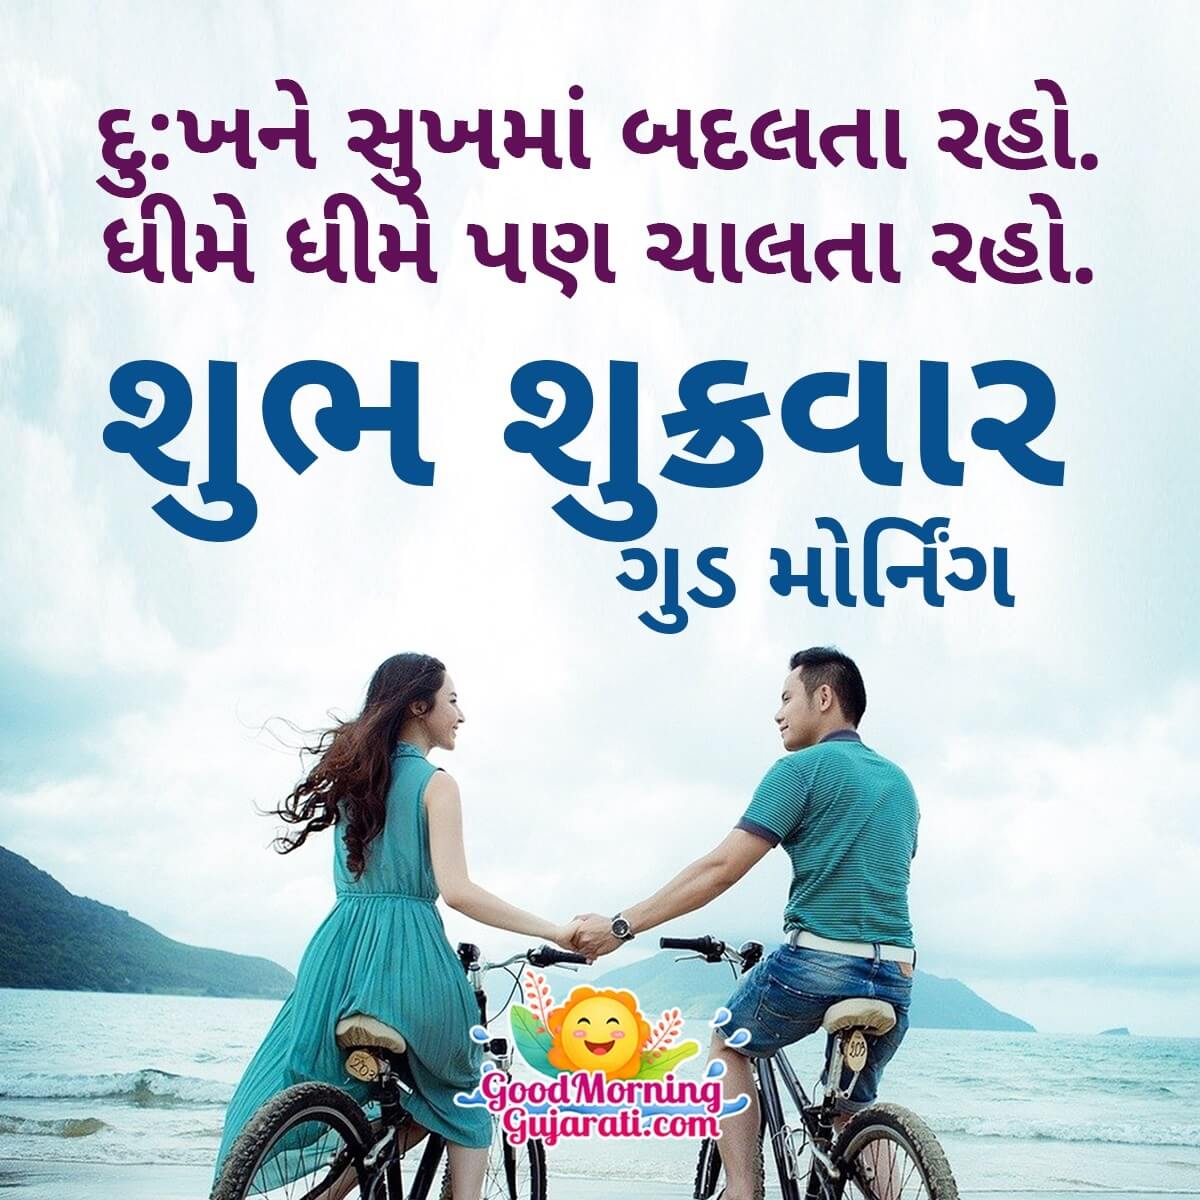 Happy Friday Message In Gujarati